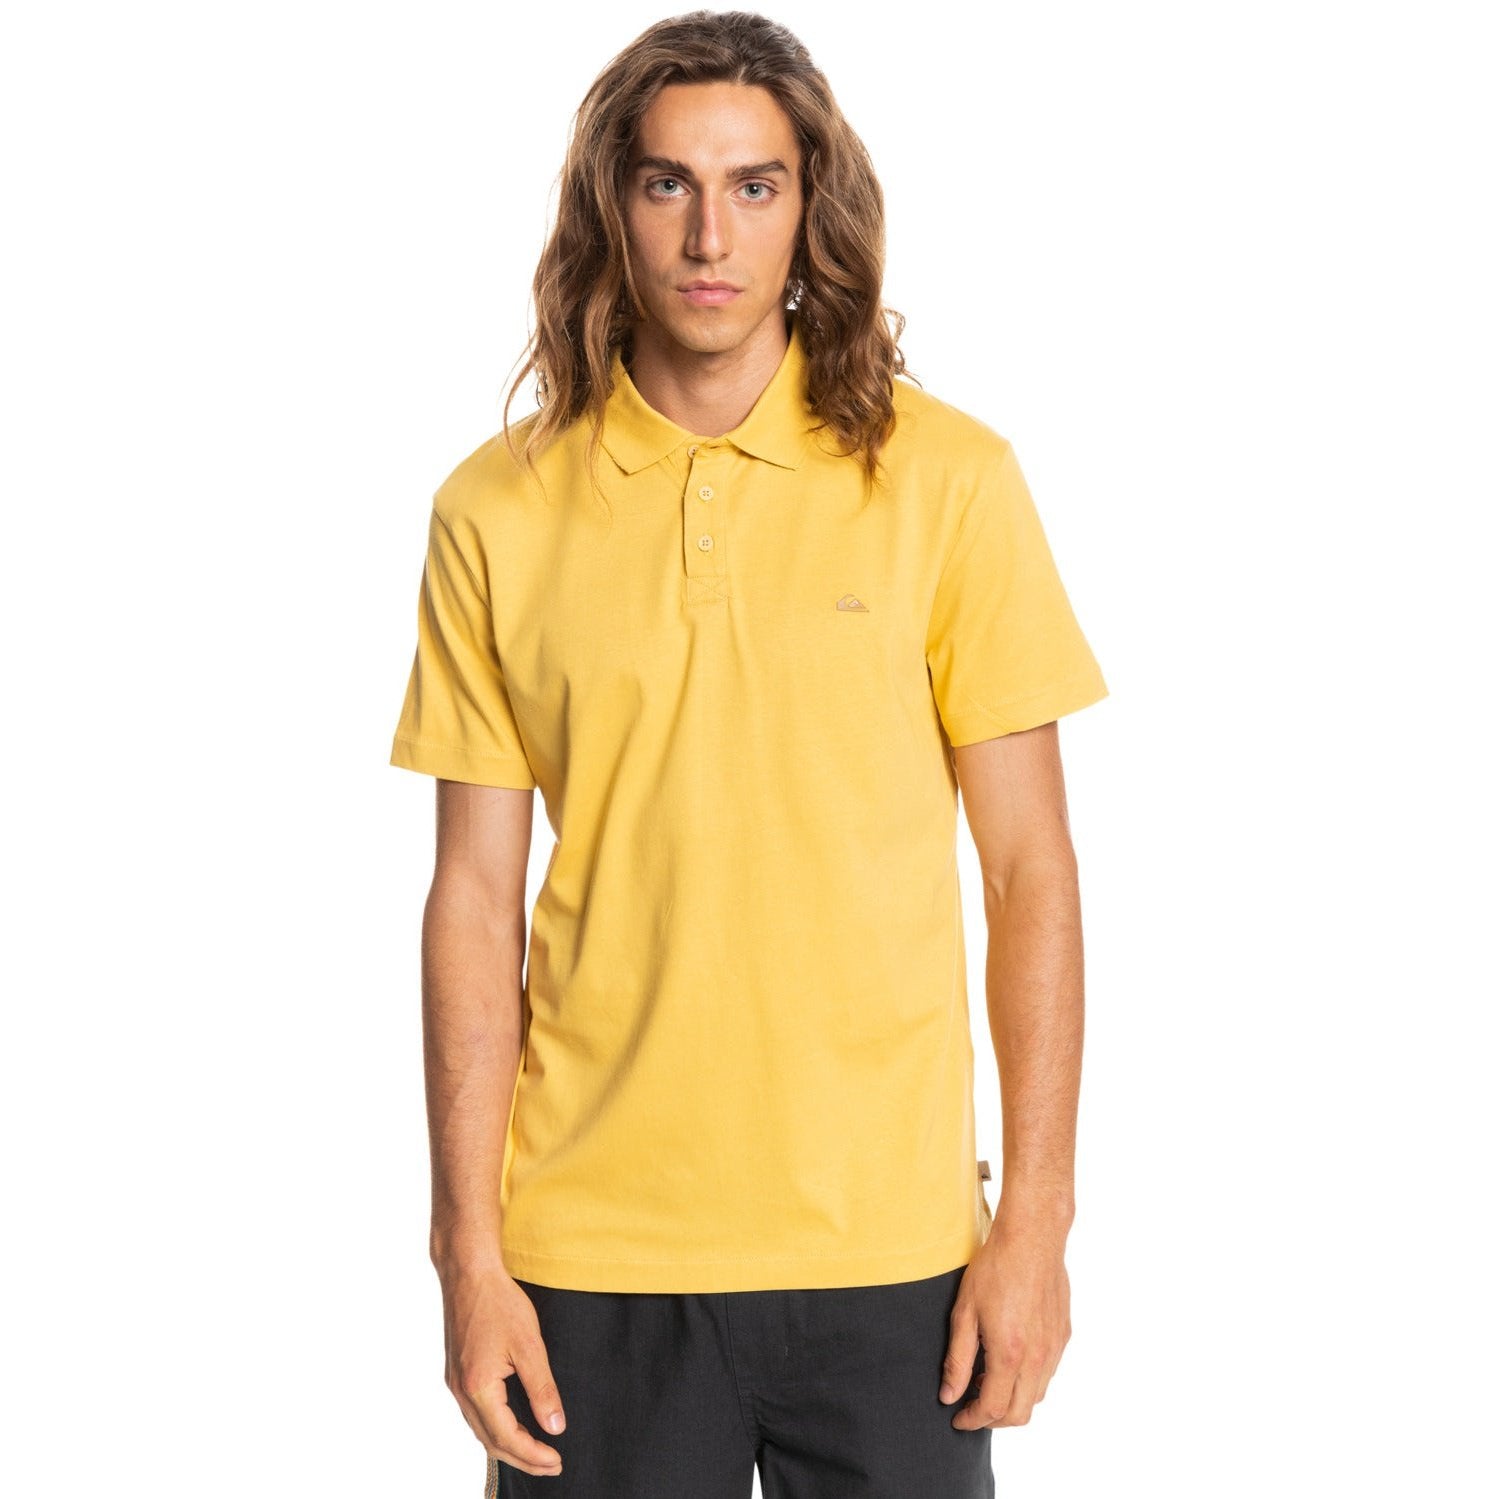 Essentials - Organic Short Sleeve Polo Shirt for Men - Sporty Pro